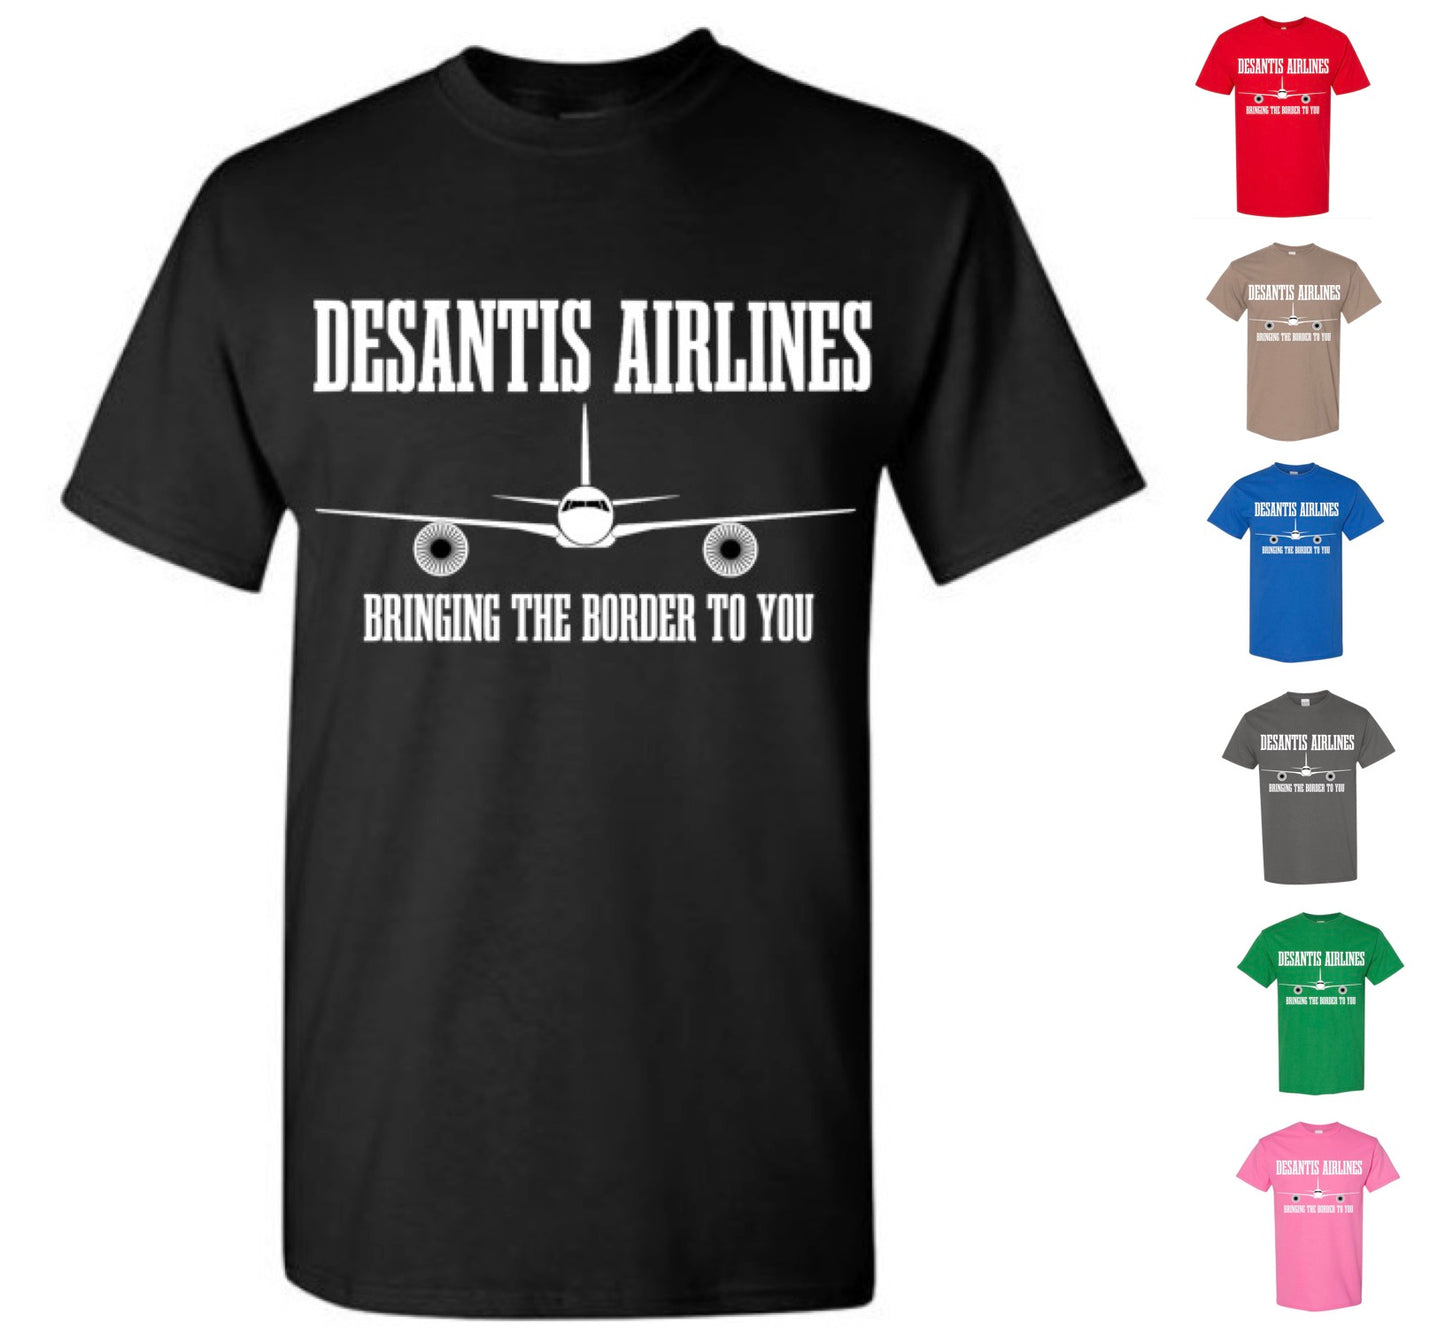 DeSantis Airlines T-Shirt (FREE Shipping!)